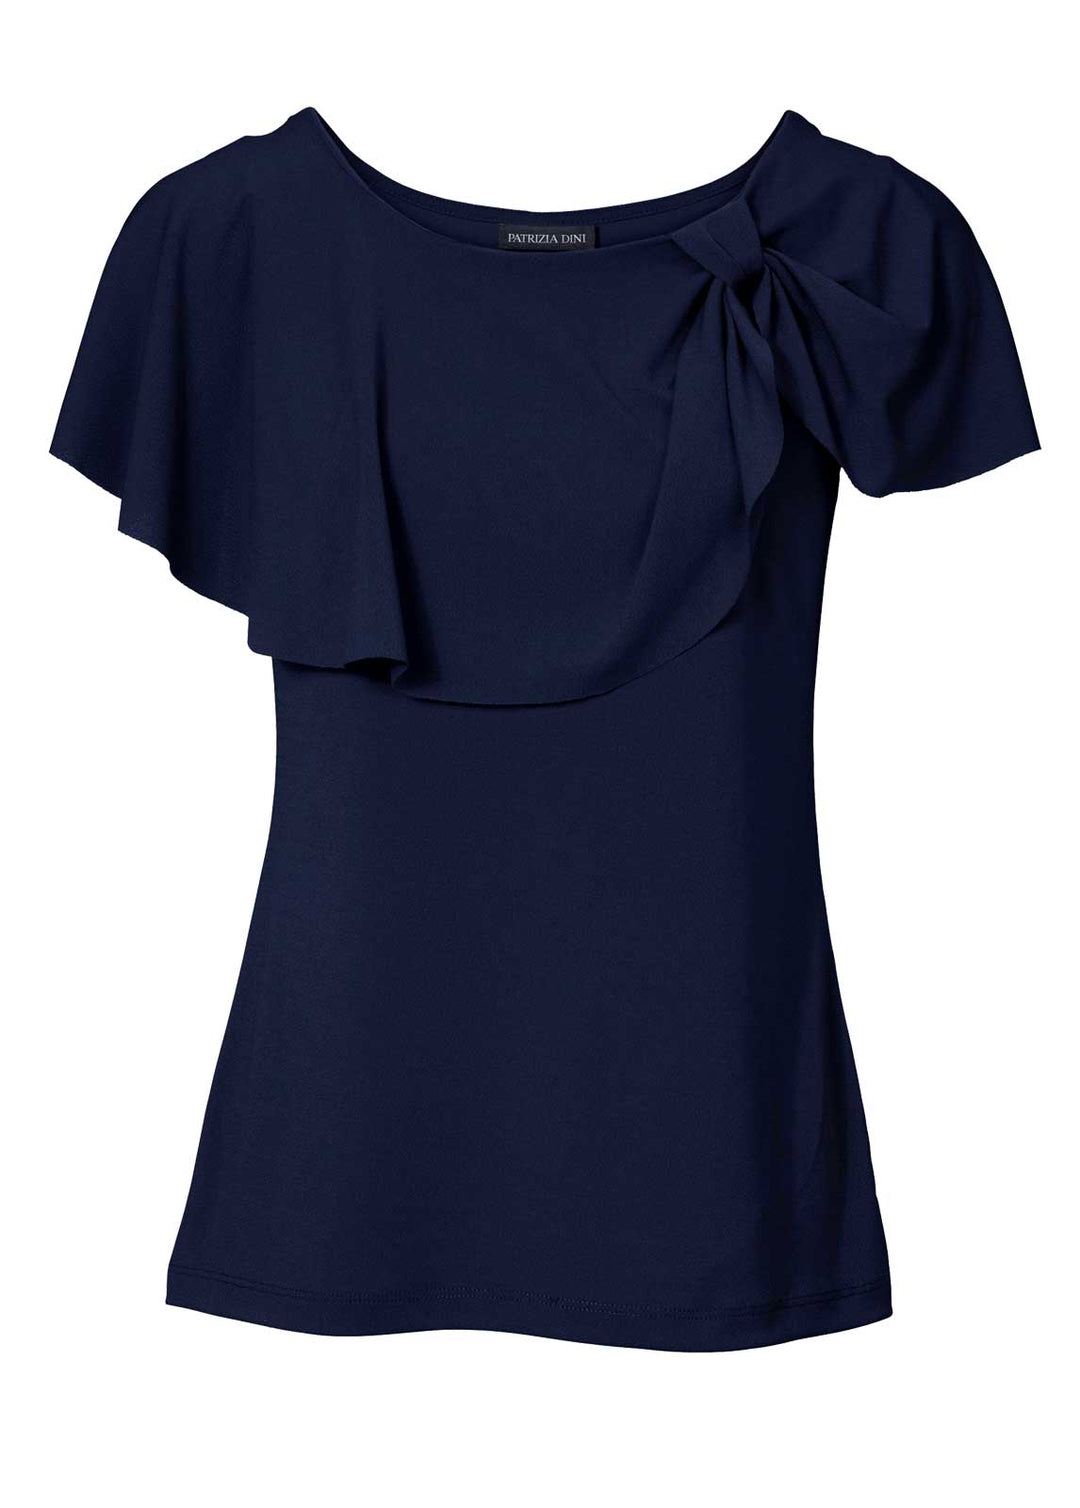 Patrizia Dini Damen Designer-Blusenshirt, blau